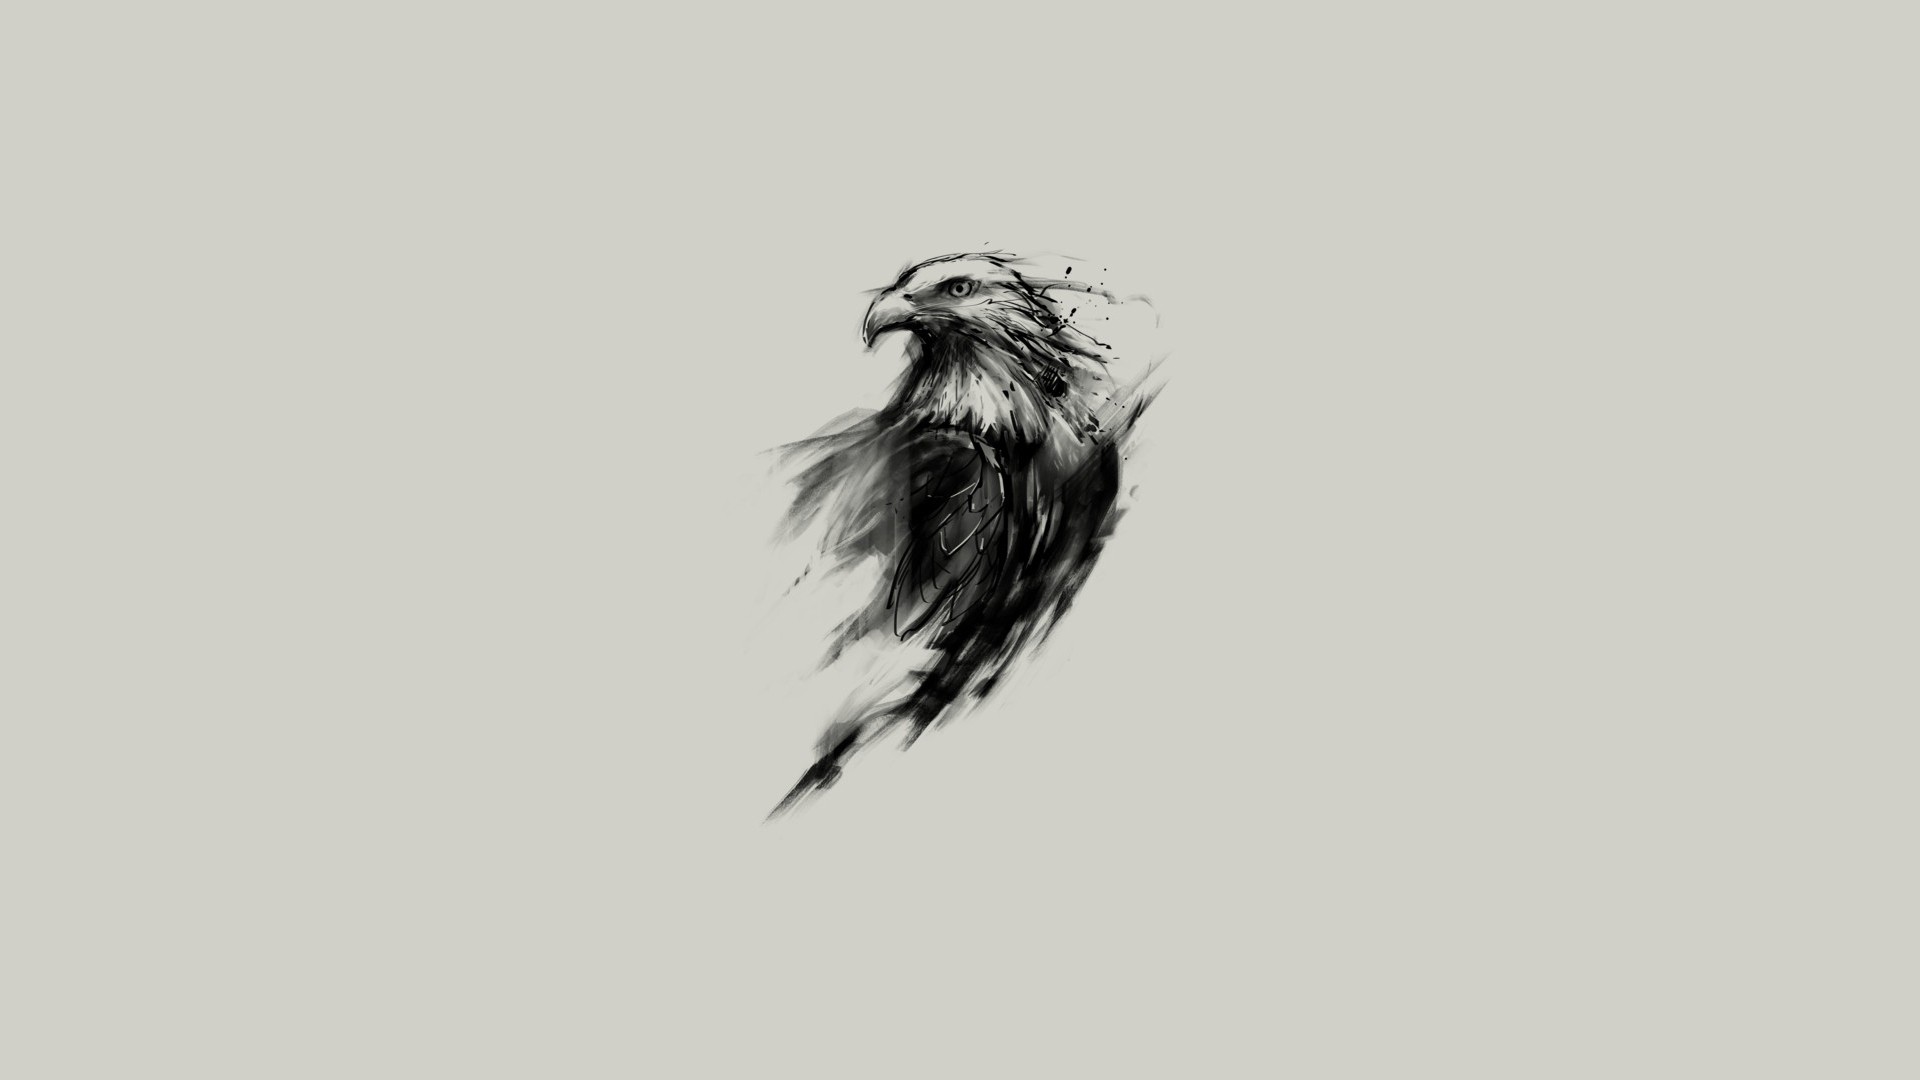 General 1920x1080 eagle bald eagle birds simple background sketches monochrome animals minimalism artwork digital art